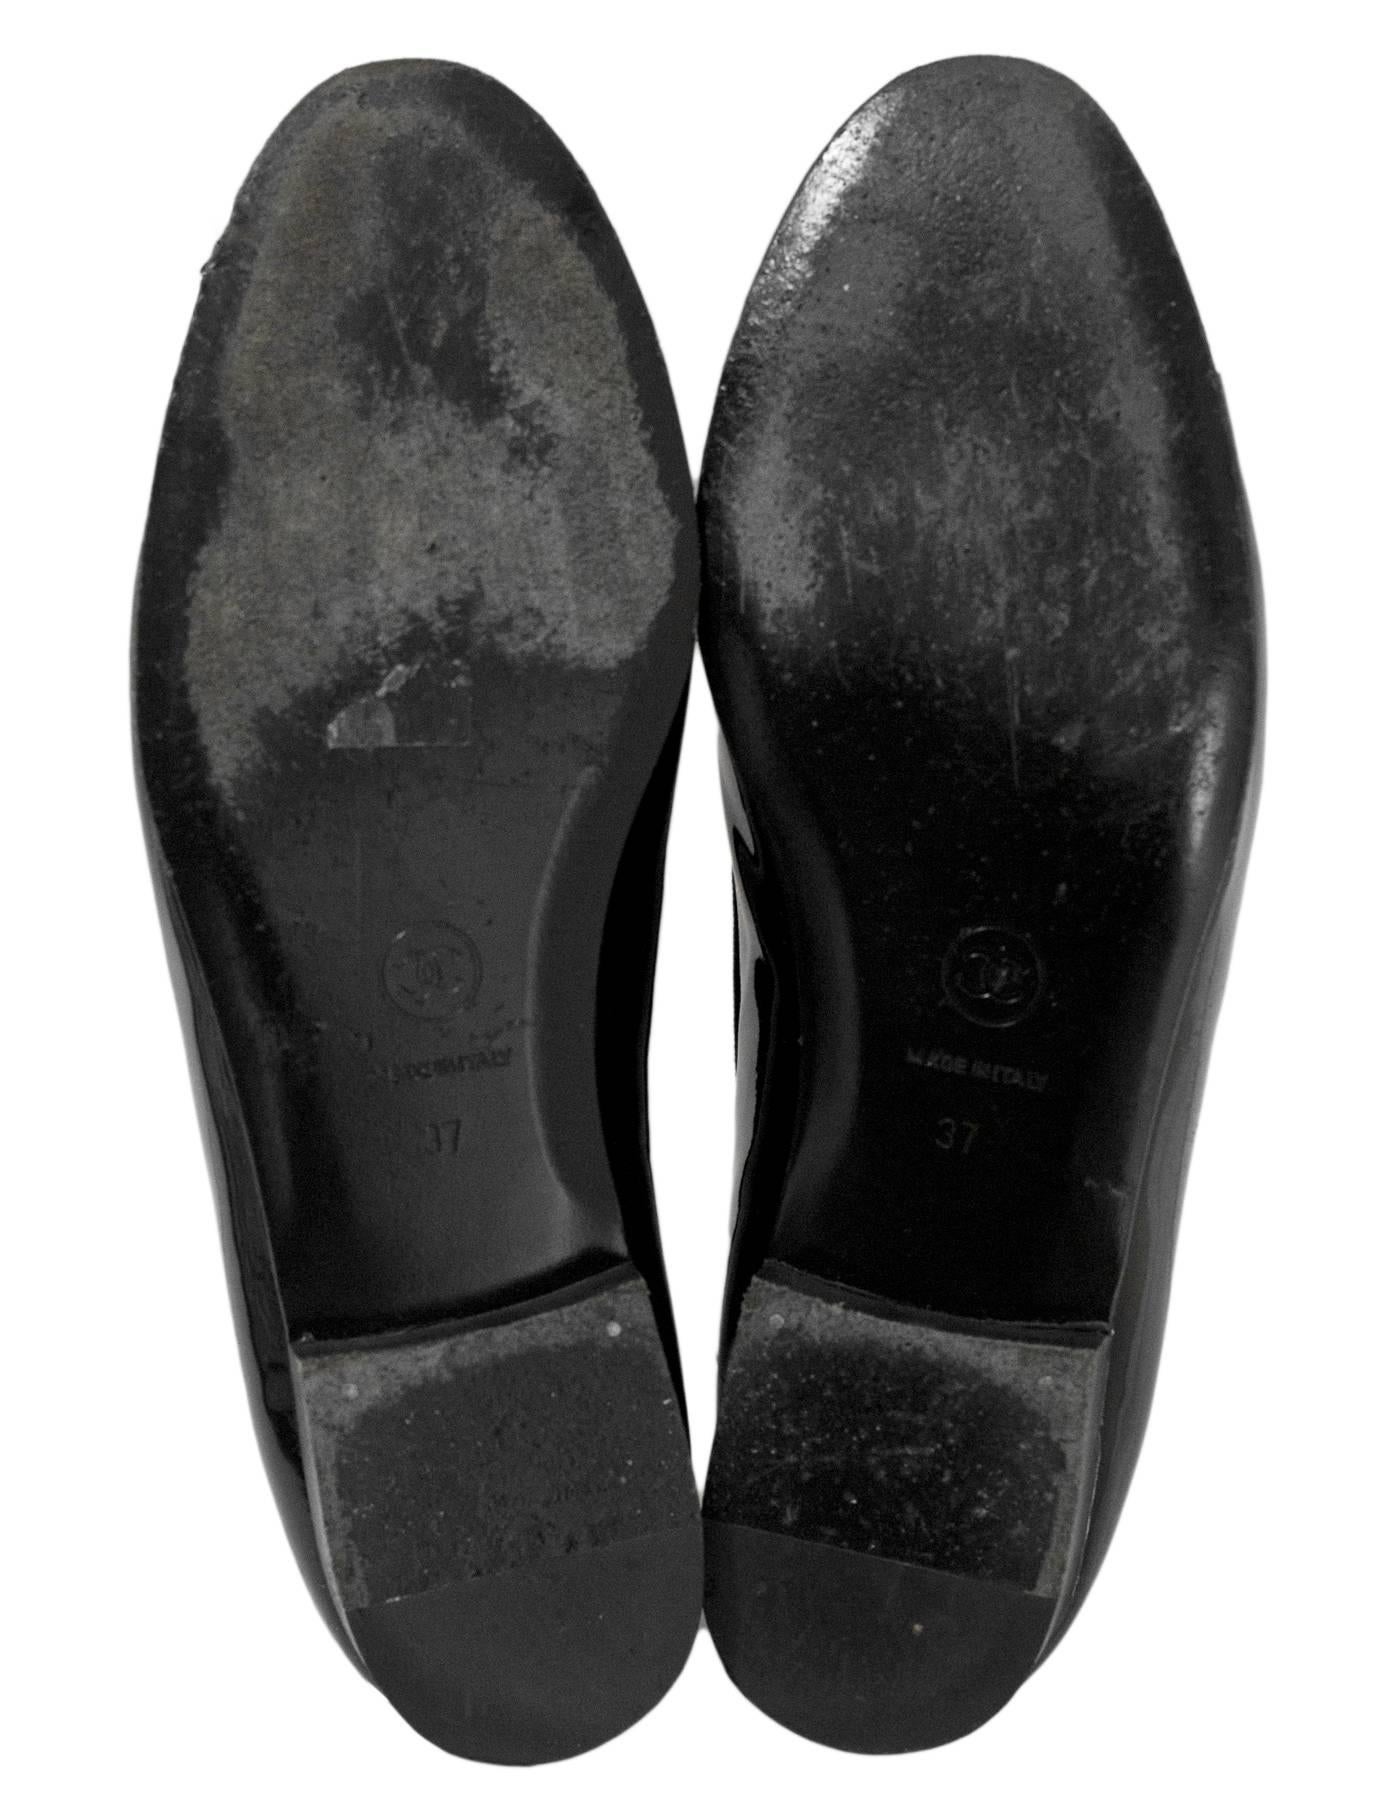 Chanel Black & White Patent Cap-Toe Flats Sz 37 1